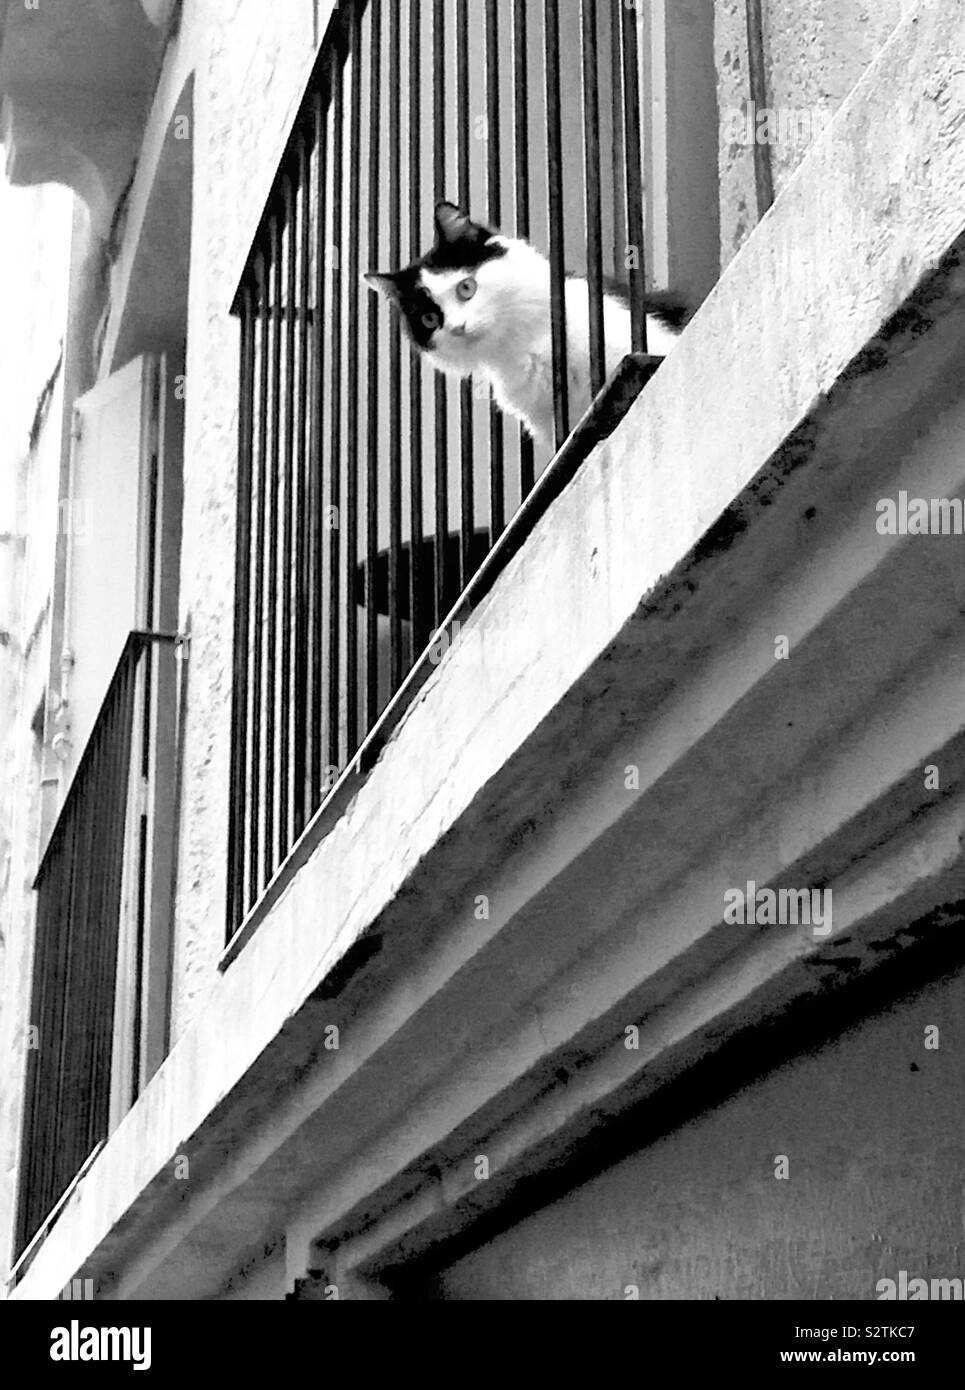 Peekaboo! Black and white cat on a balcony Stock Photo